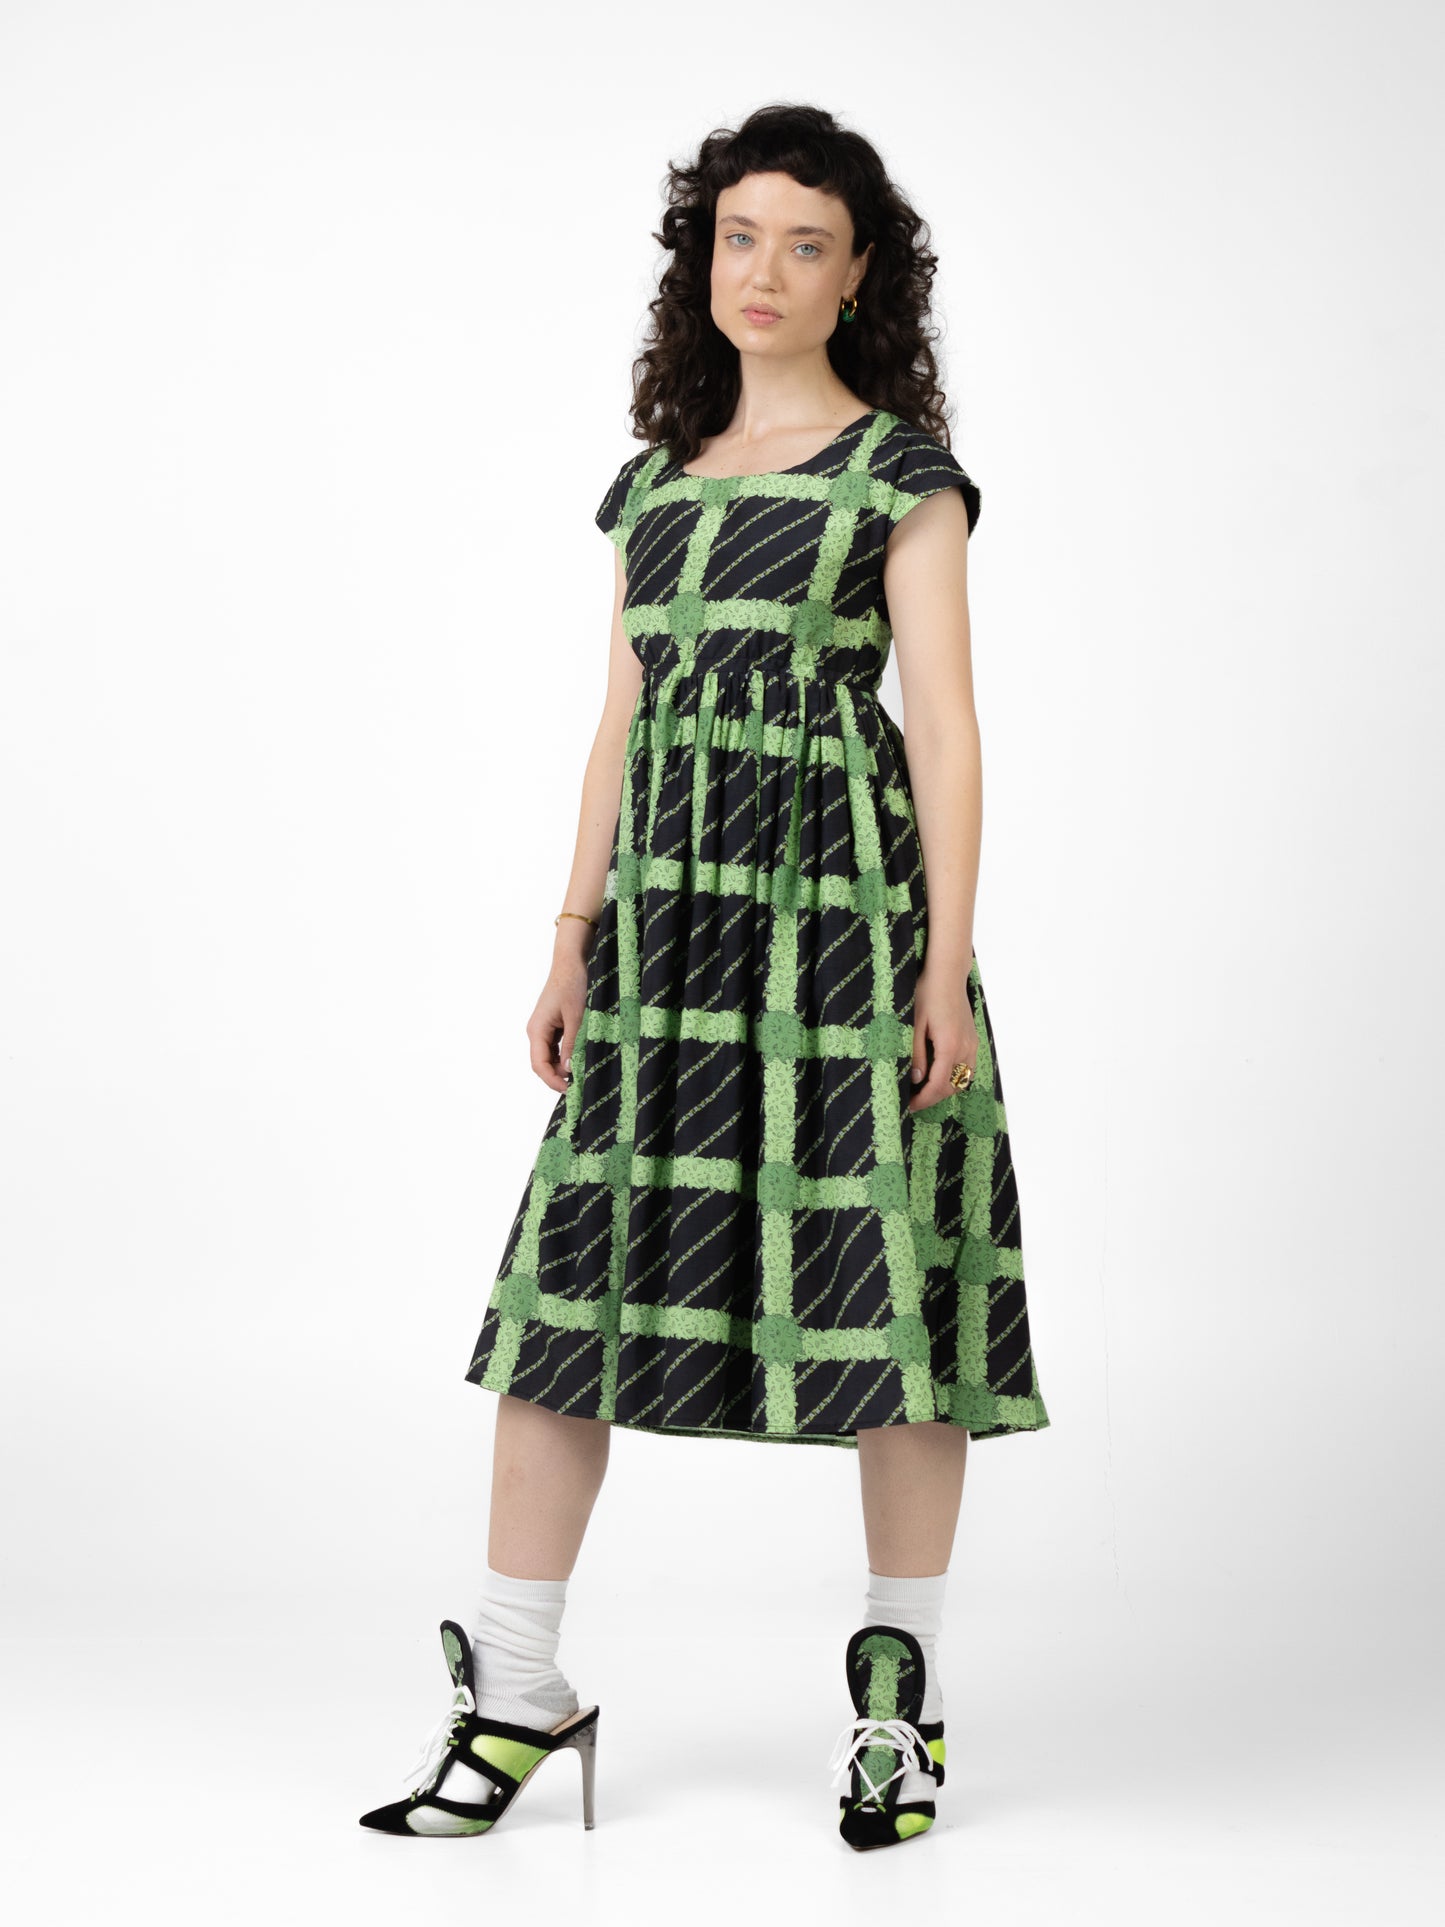 Topiary Tartan dress